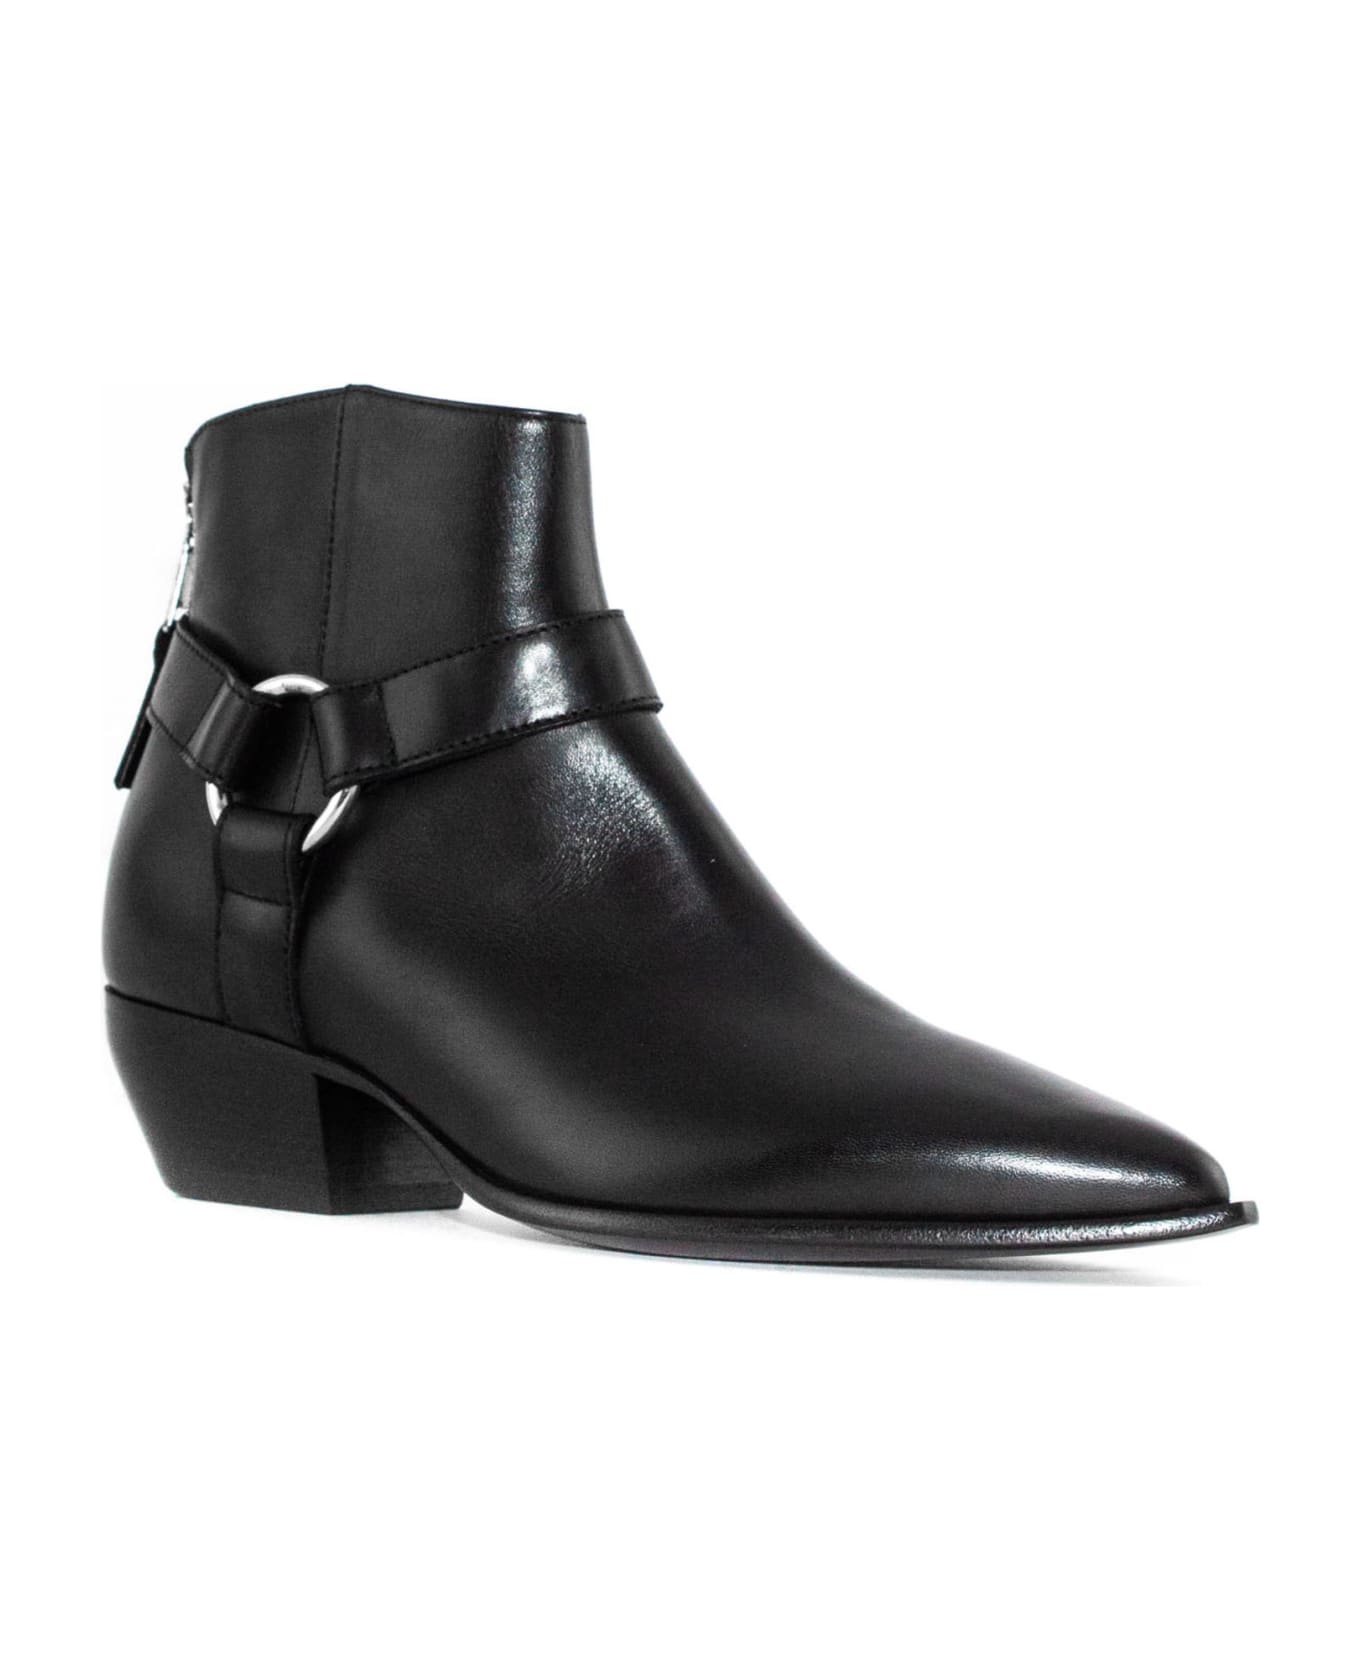 Elena Iachi Black Leather Ankle Boot - Nero